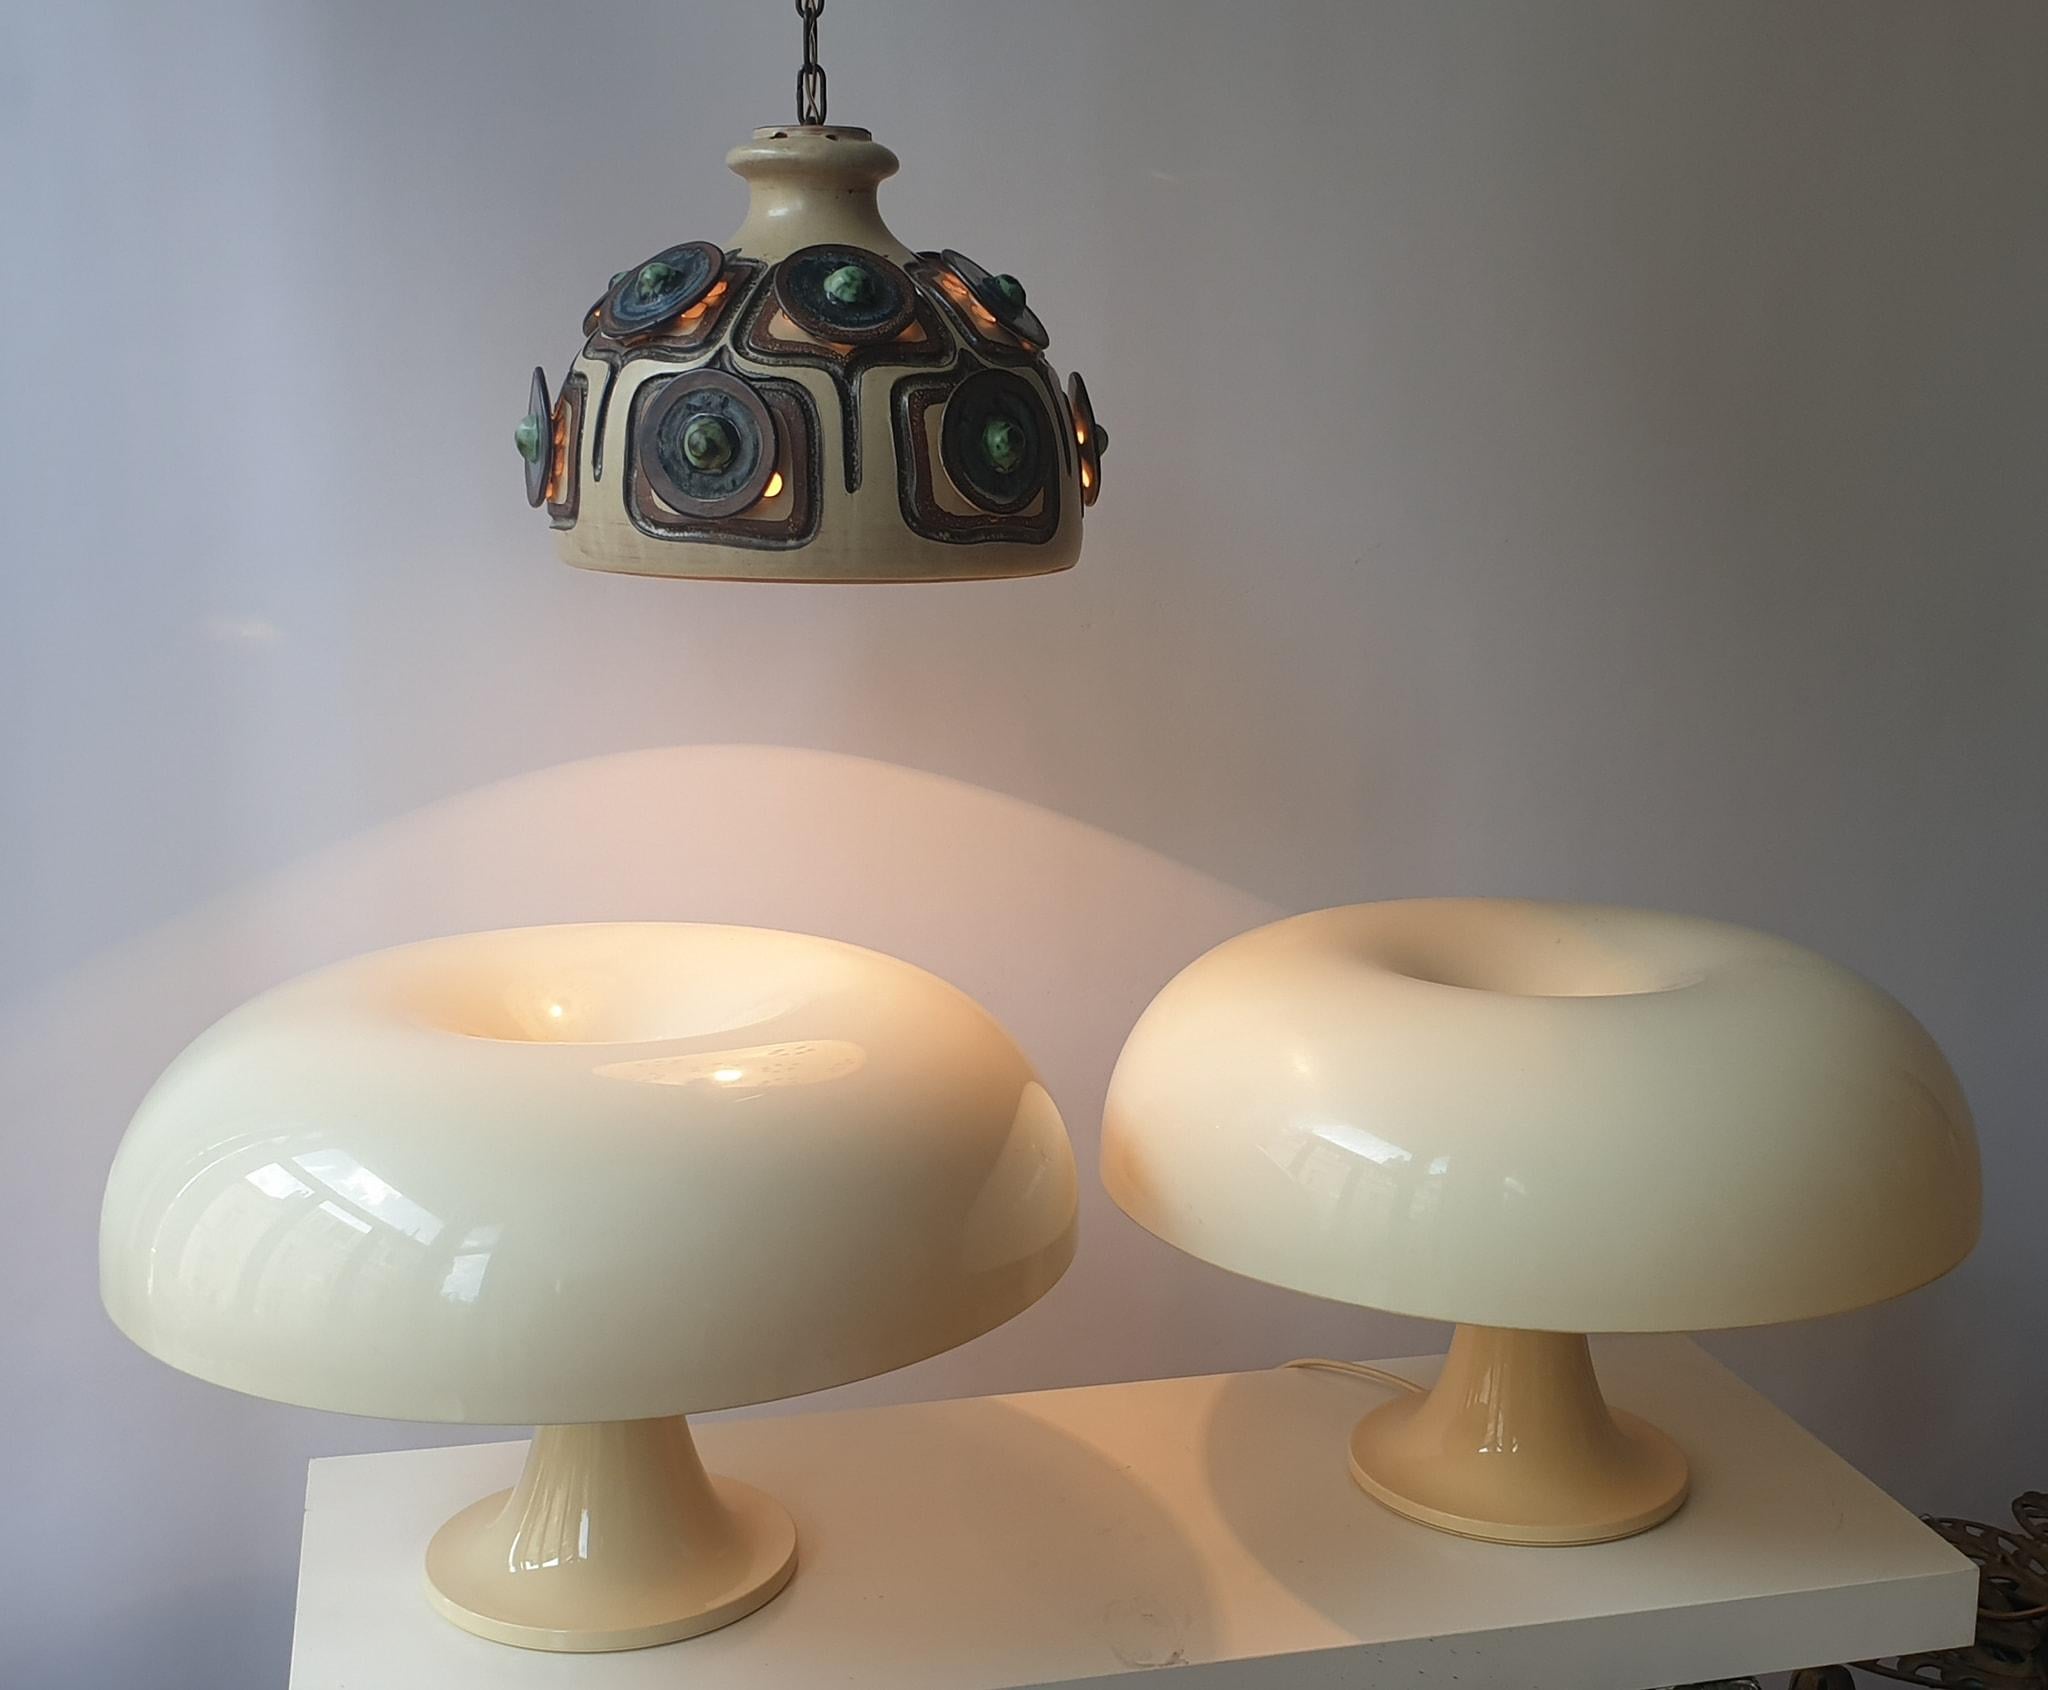 Pair of Italian Giancarlo Mattioli Nesso table lamps by Artemide.

Artemide Nesso table lamp
Materials: Cream ABS plastic mushroom lamp with 4 white painted Bakelite sockets.

Measures: Height 34 cm / 13.38”

Width Ø 54 cm / 21.25”

Base Ø